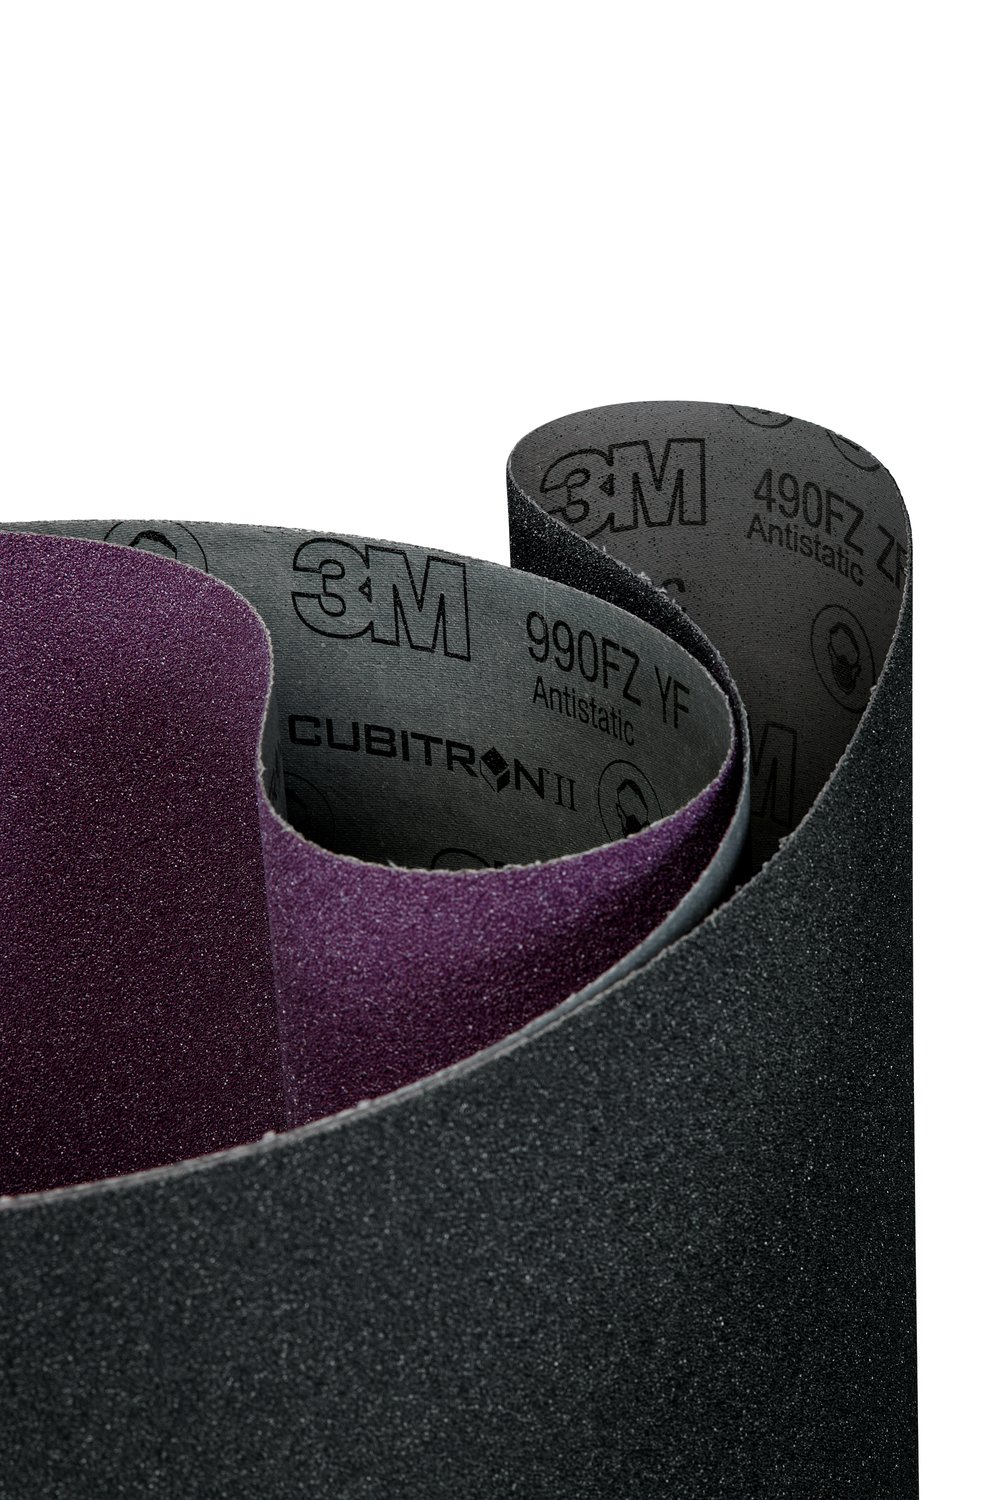 7100224018 - 3M SiC Cloth Belt 490FZ, P40 ZF-weight, 43 in x 103 in, Sine-lok
Precision Roll Grinding, Single-flex, 2 ea/Case